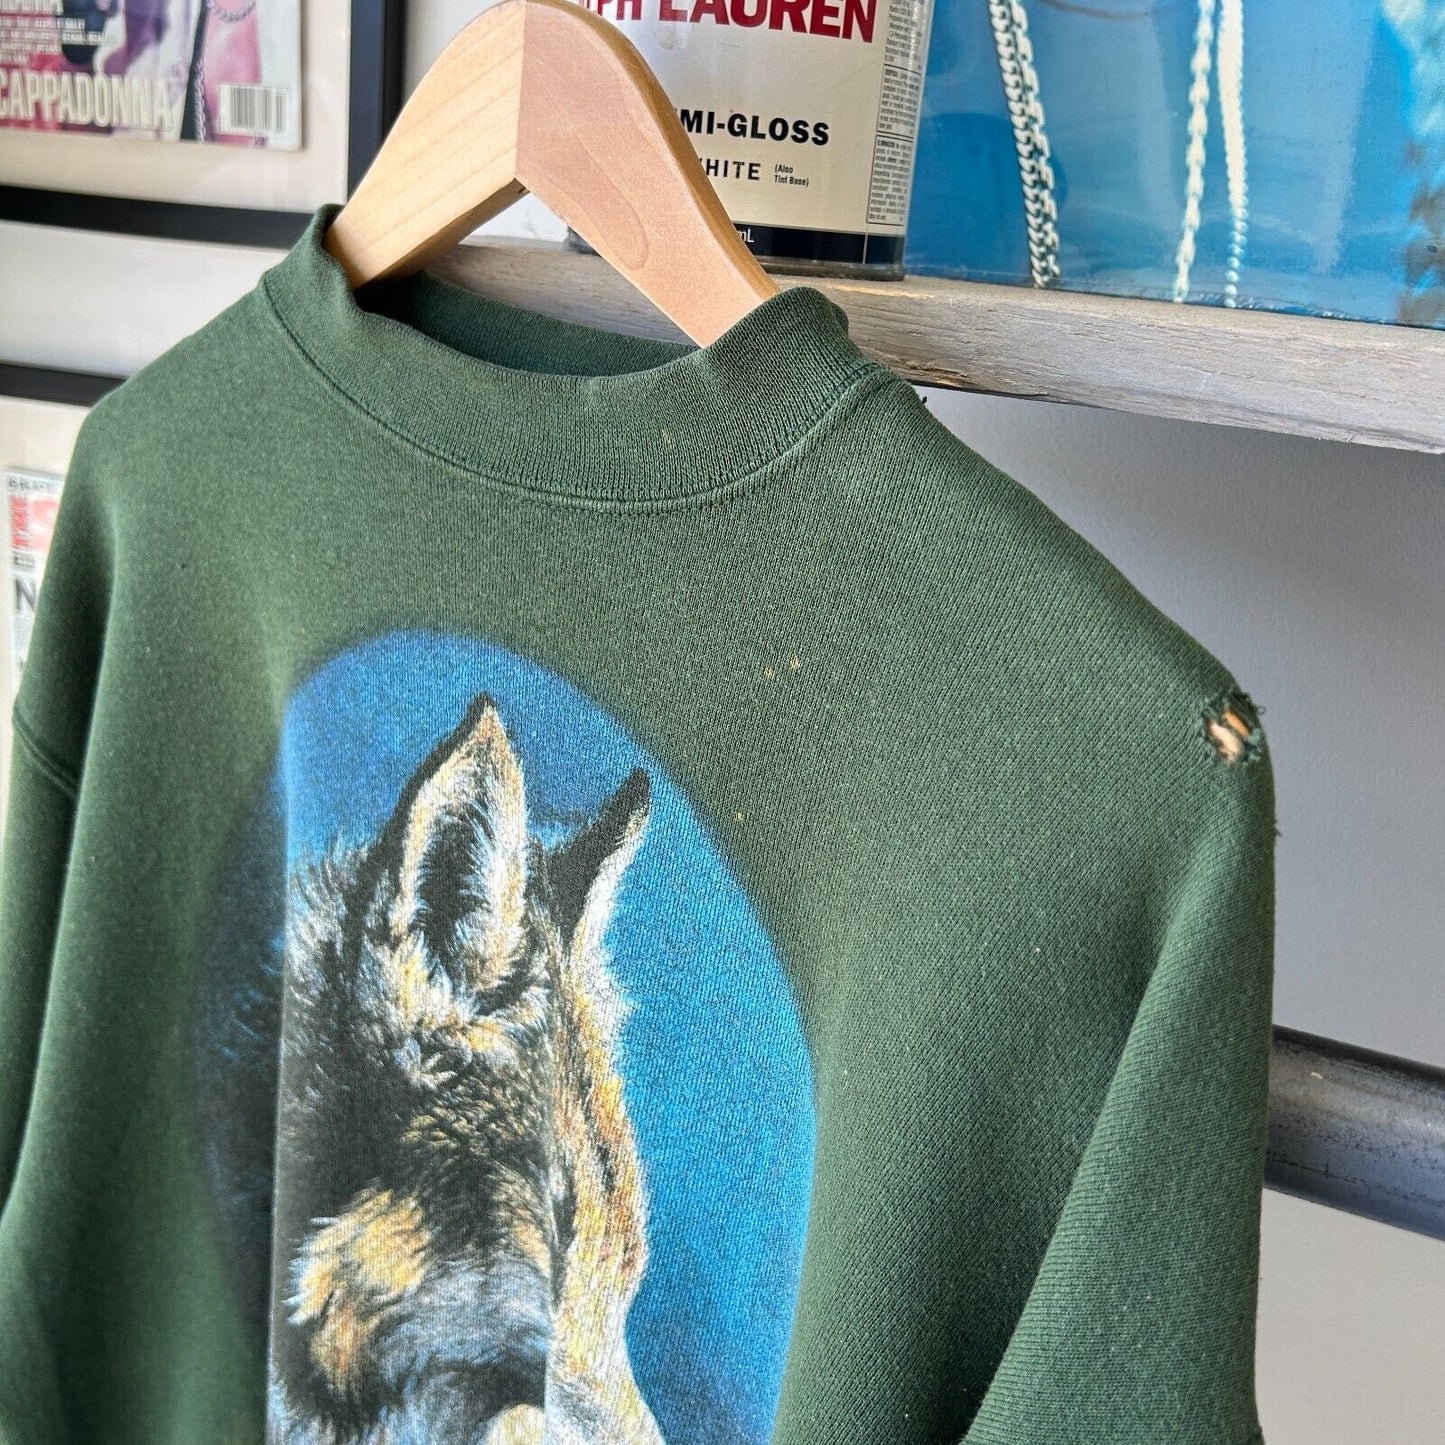 VINTAGE 90s | Canis lupus Werewolf Crewneck Sweater sz L Adult